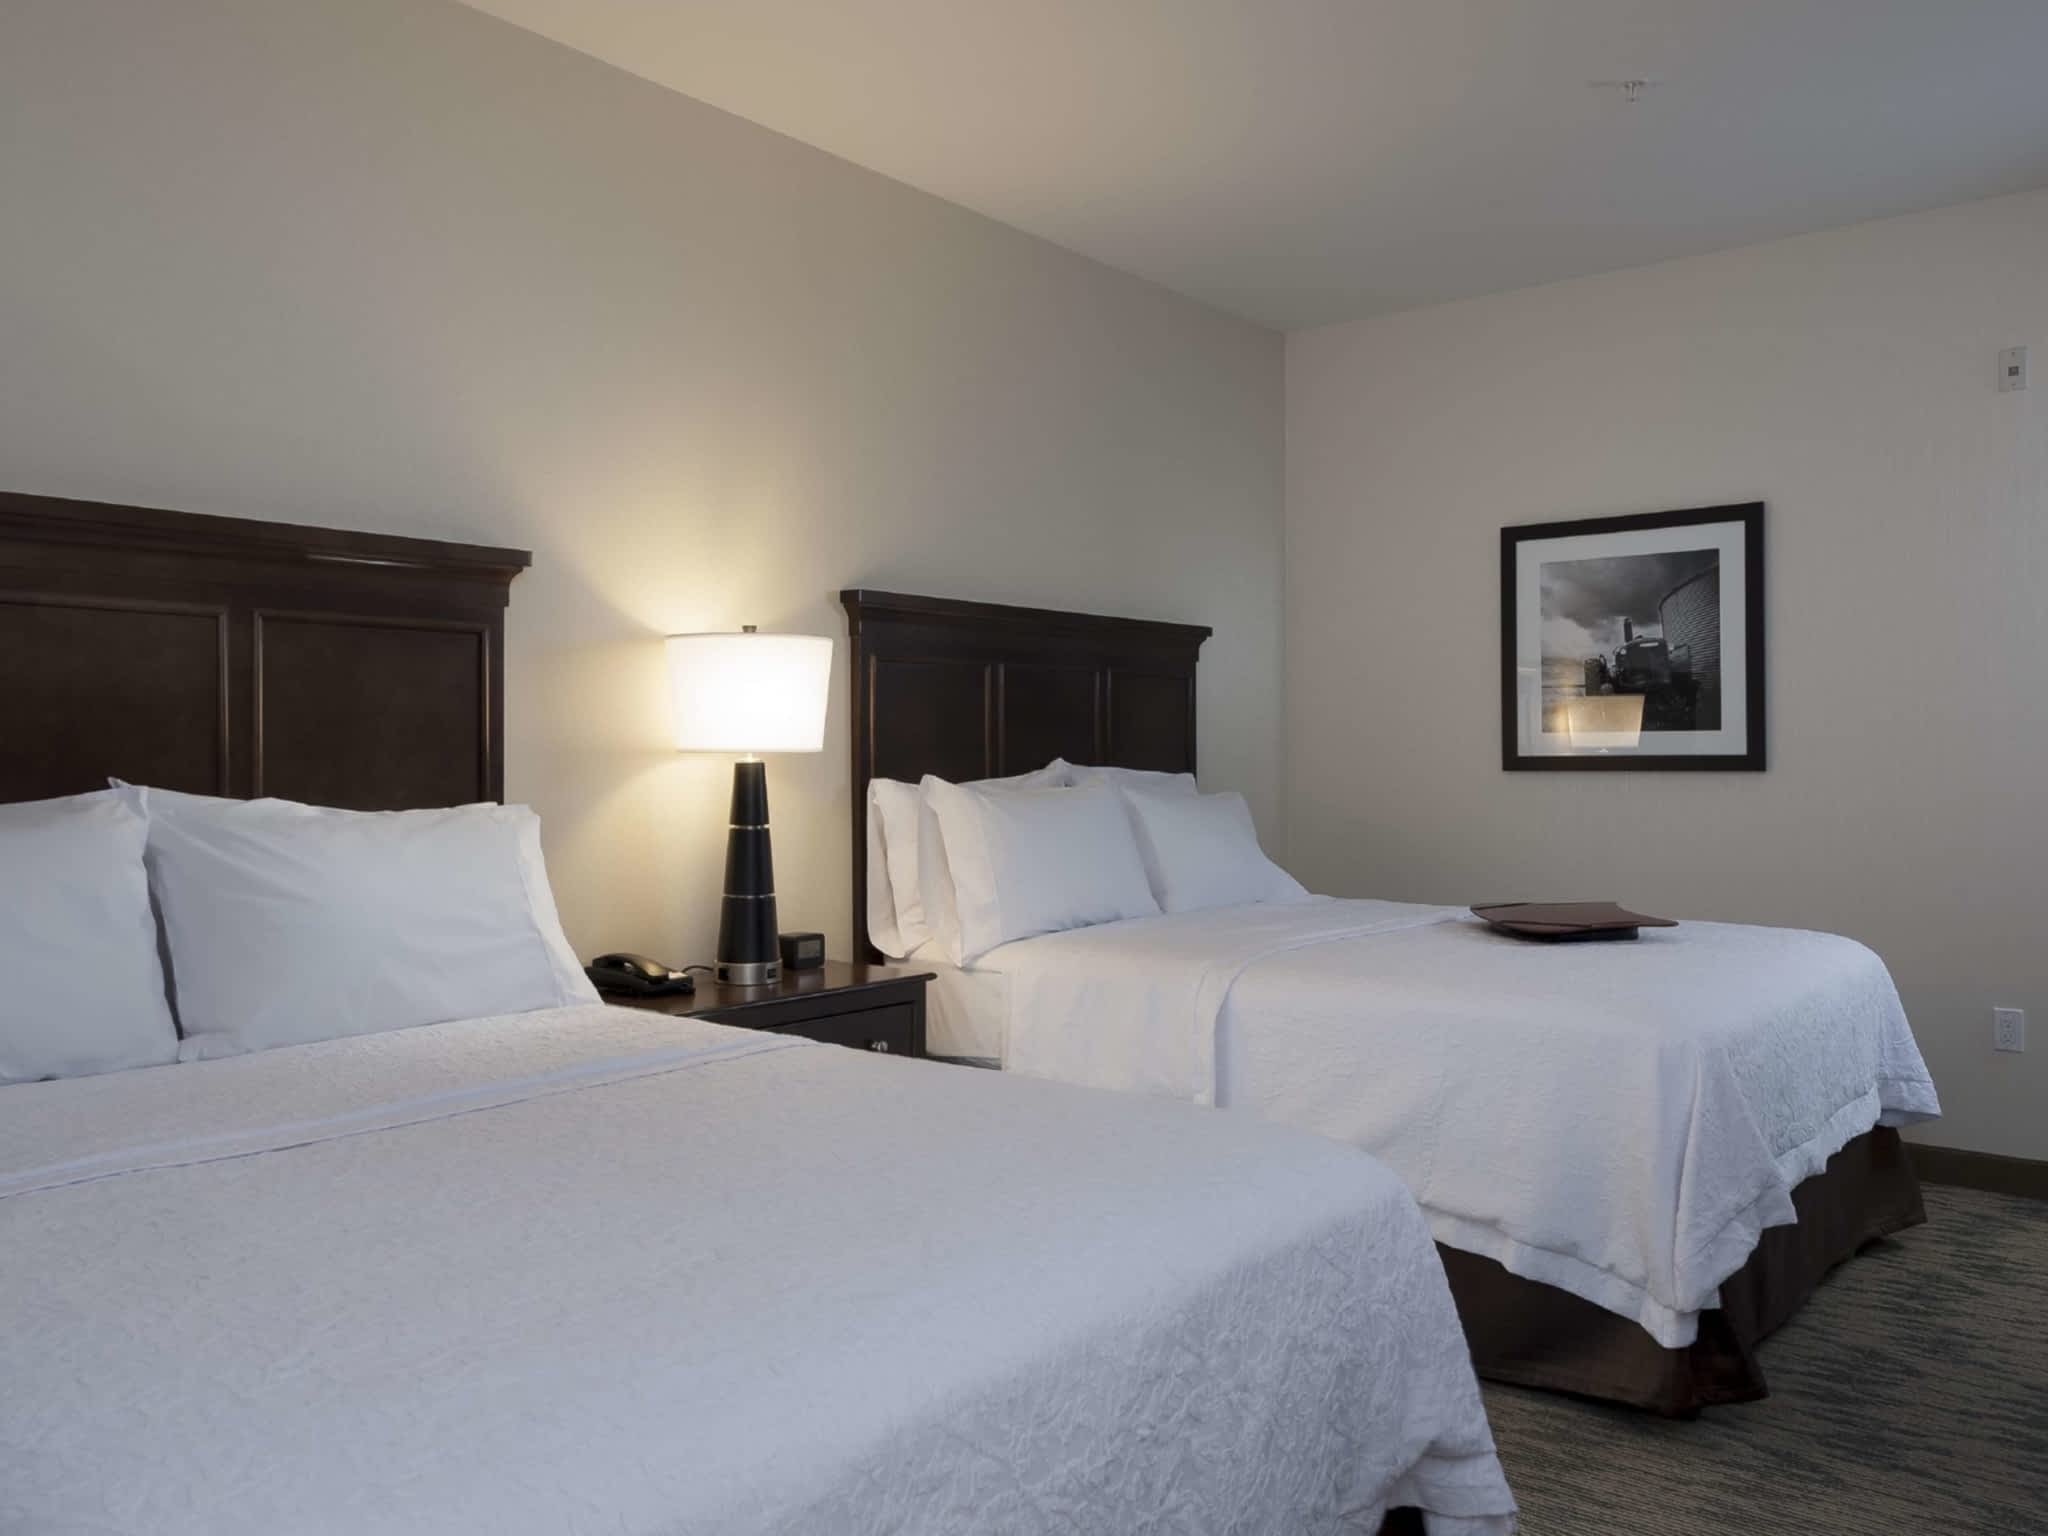 photo Hampton Inn & Suites by Hilton, Airdrie, AB, Canada - Closed